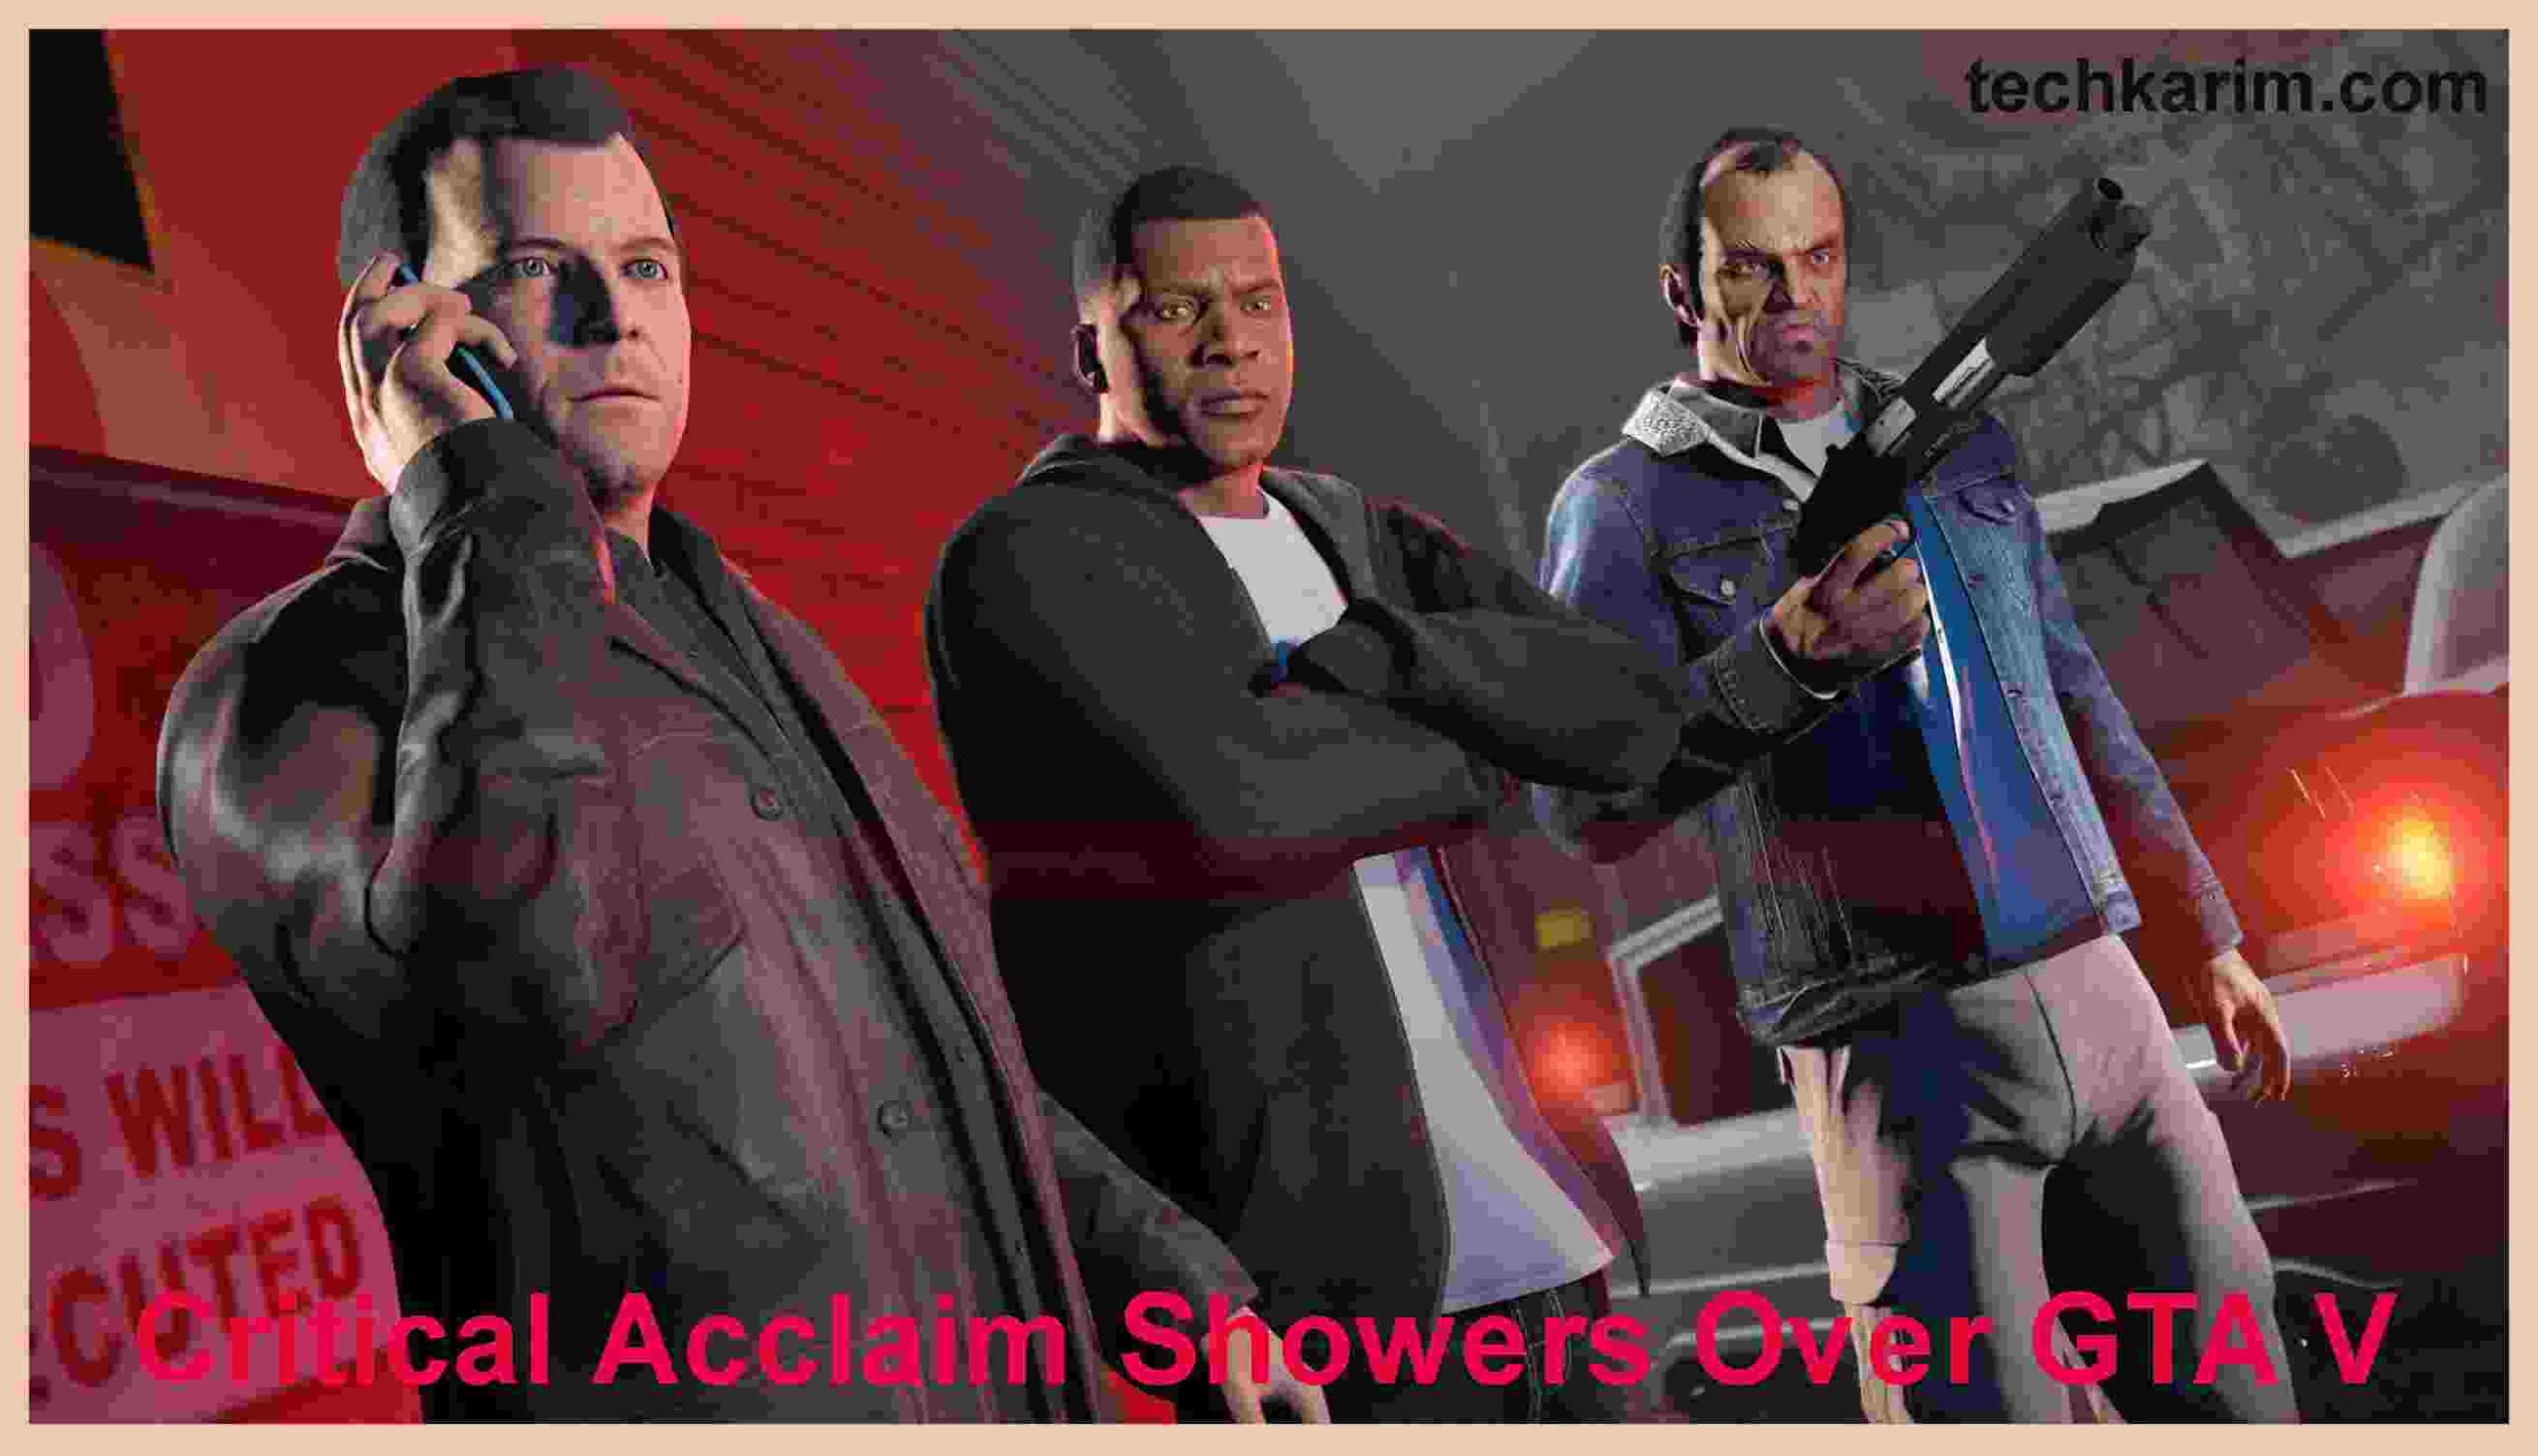 Critical Acclaim Showers Over GTA V